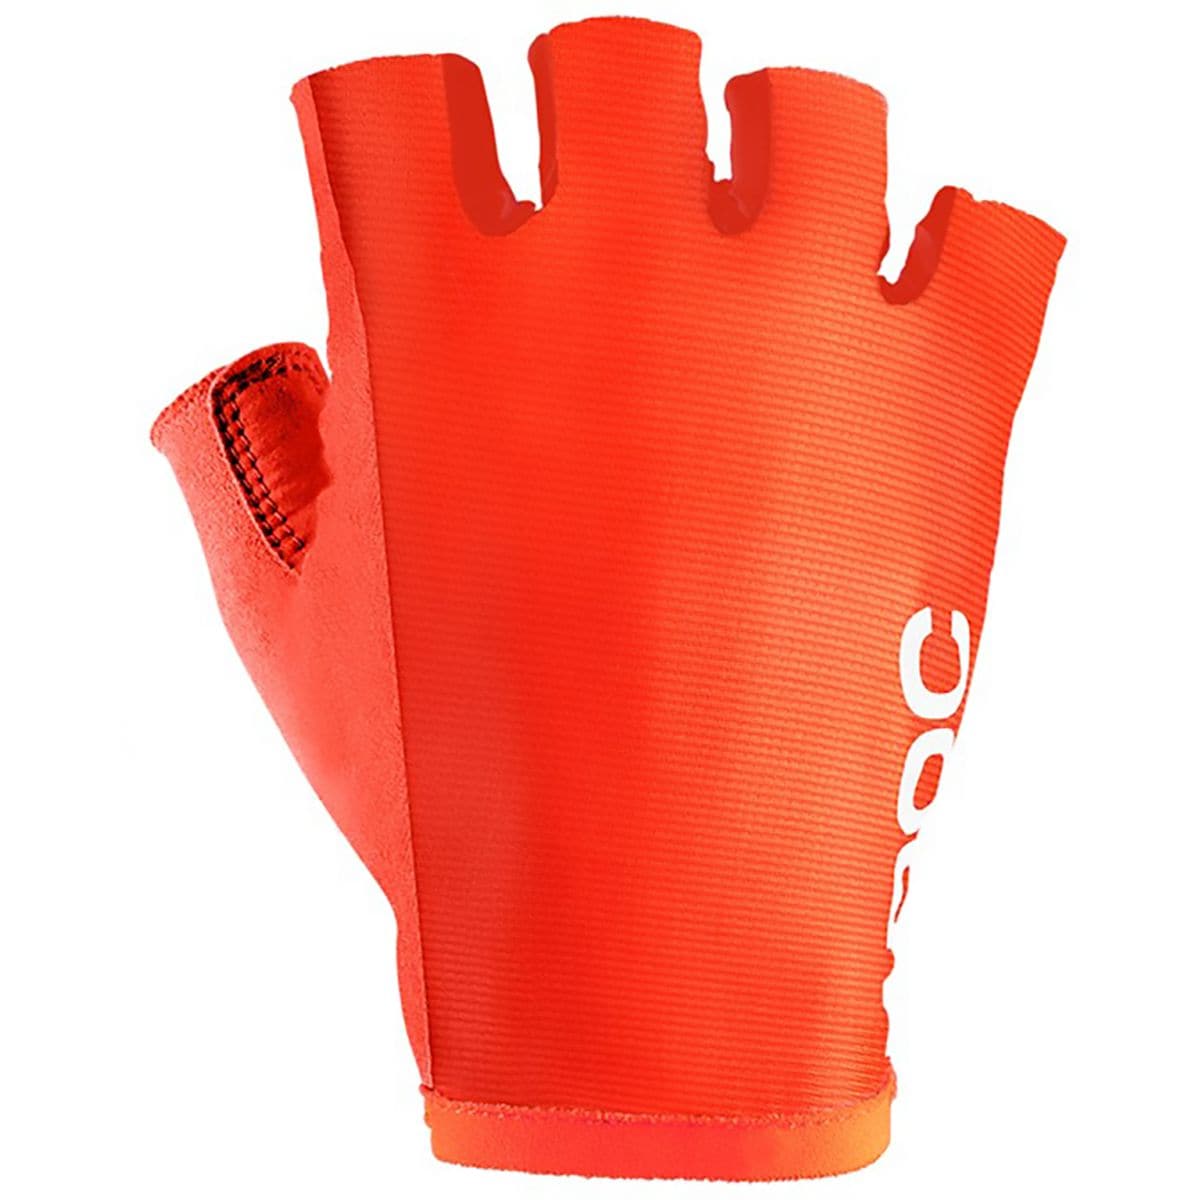 POC AVIP Short-Finger Glove - Men's Zink Orange/Black, XS